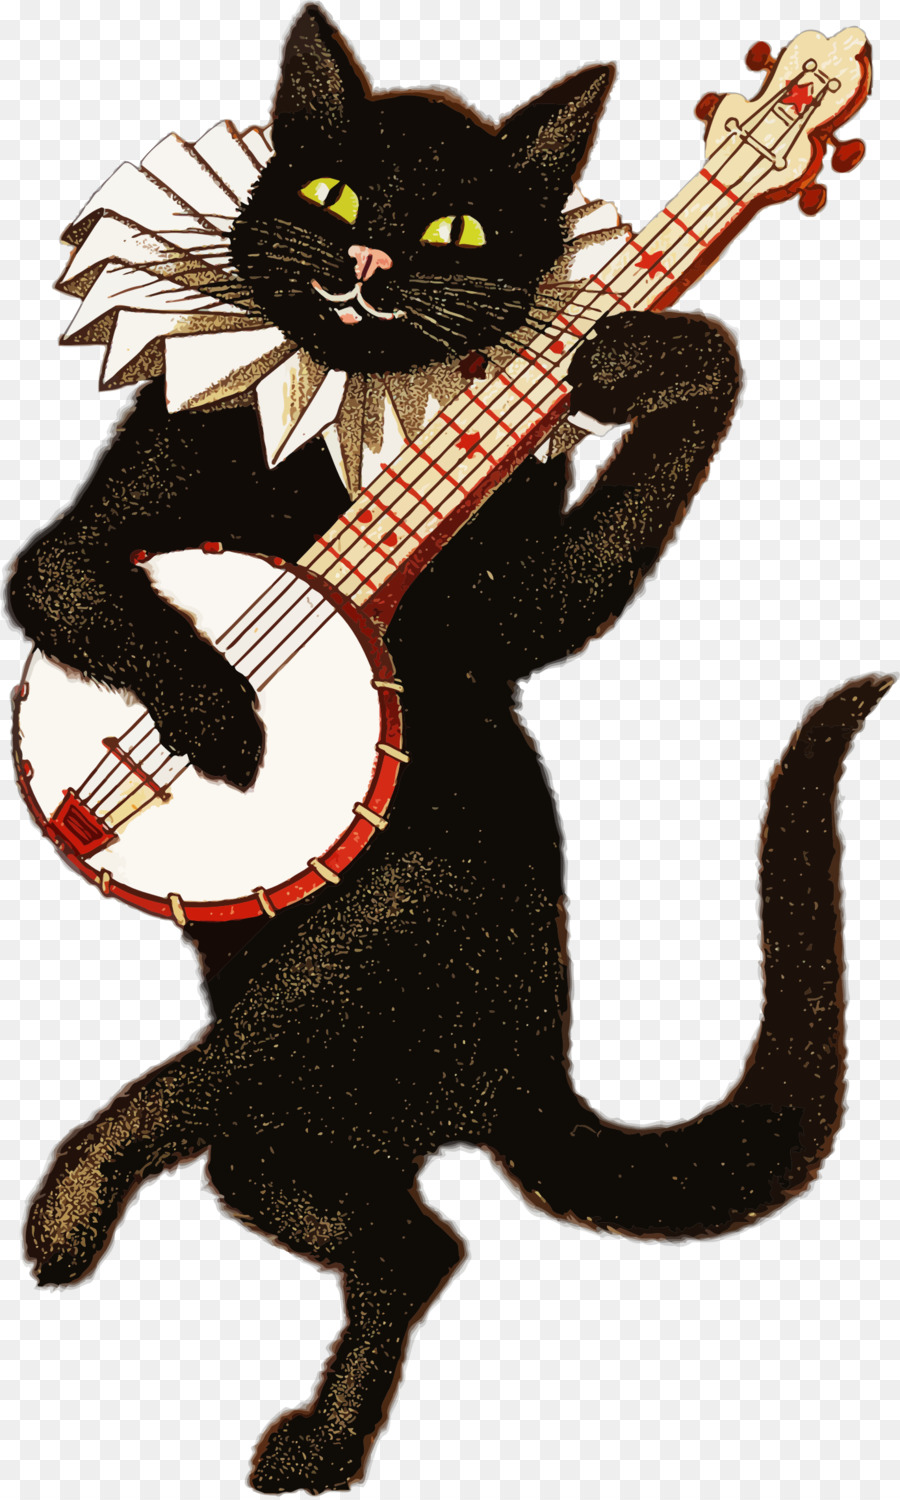 Cat T-shirt Kitten Banjo Clip art - illustrations png download - 1385*2303 - Free Transparent Cat png Download.